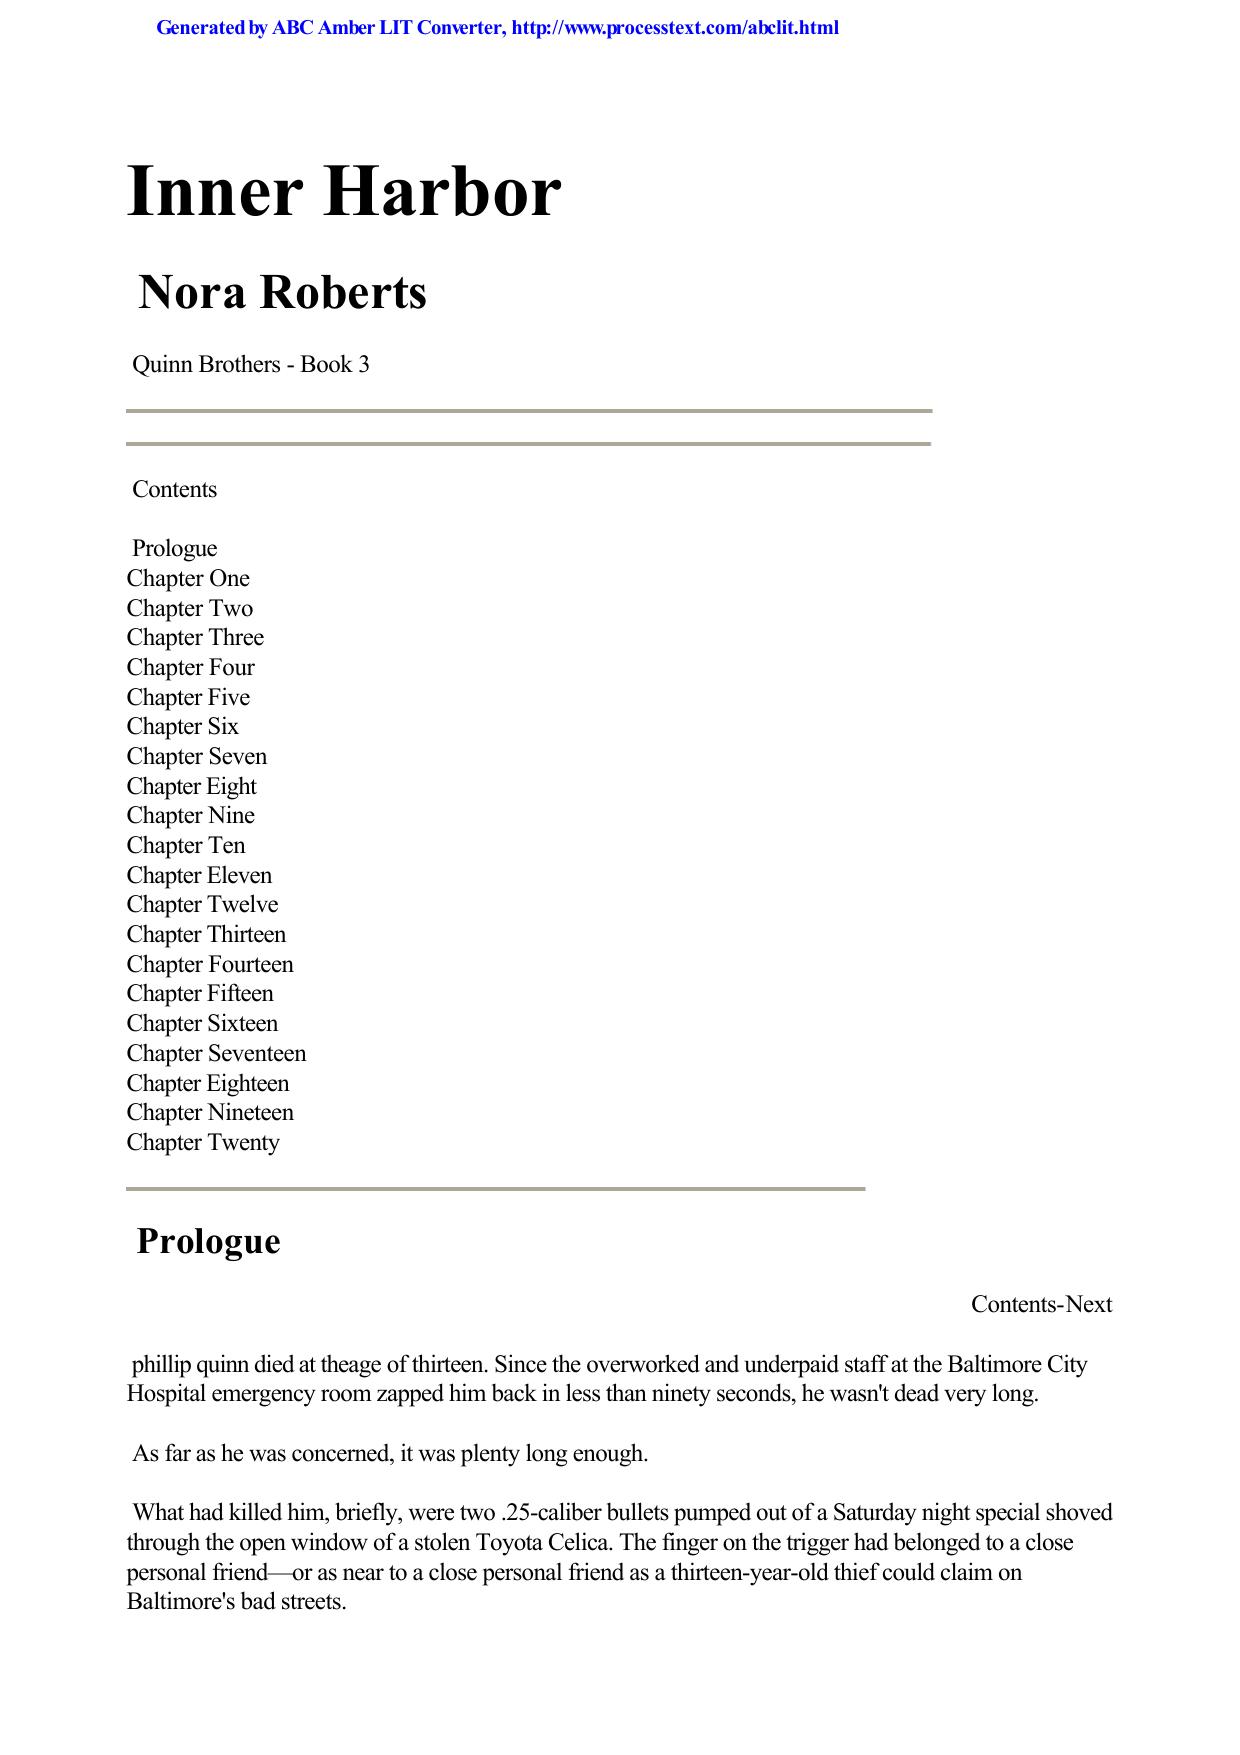 Nora Roberts - Quinn Brothers 03